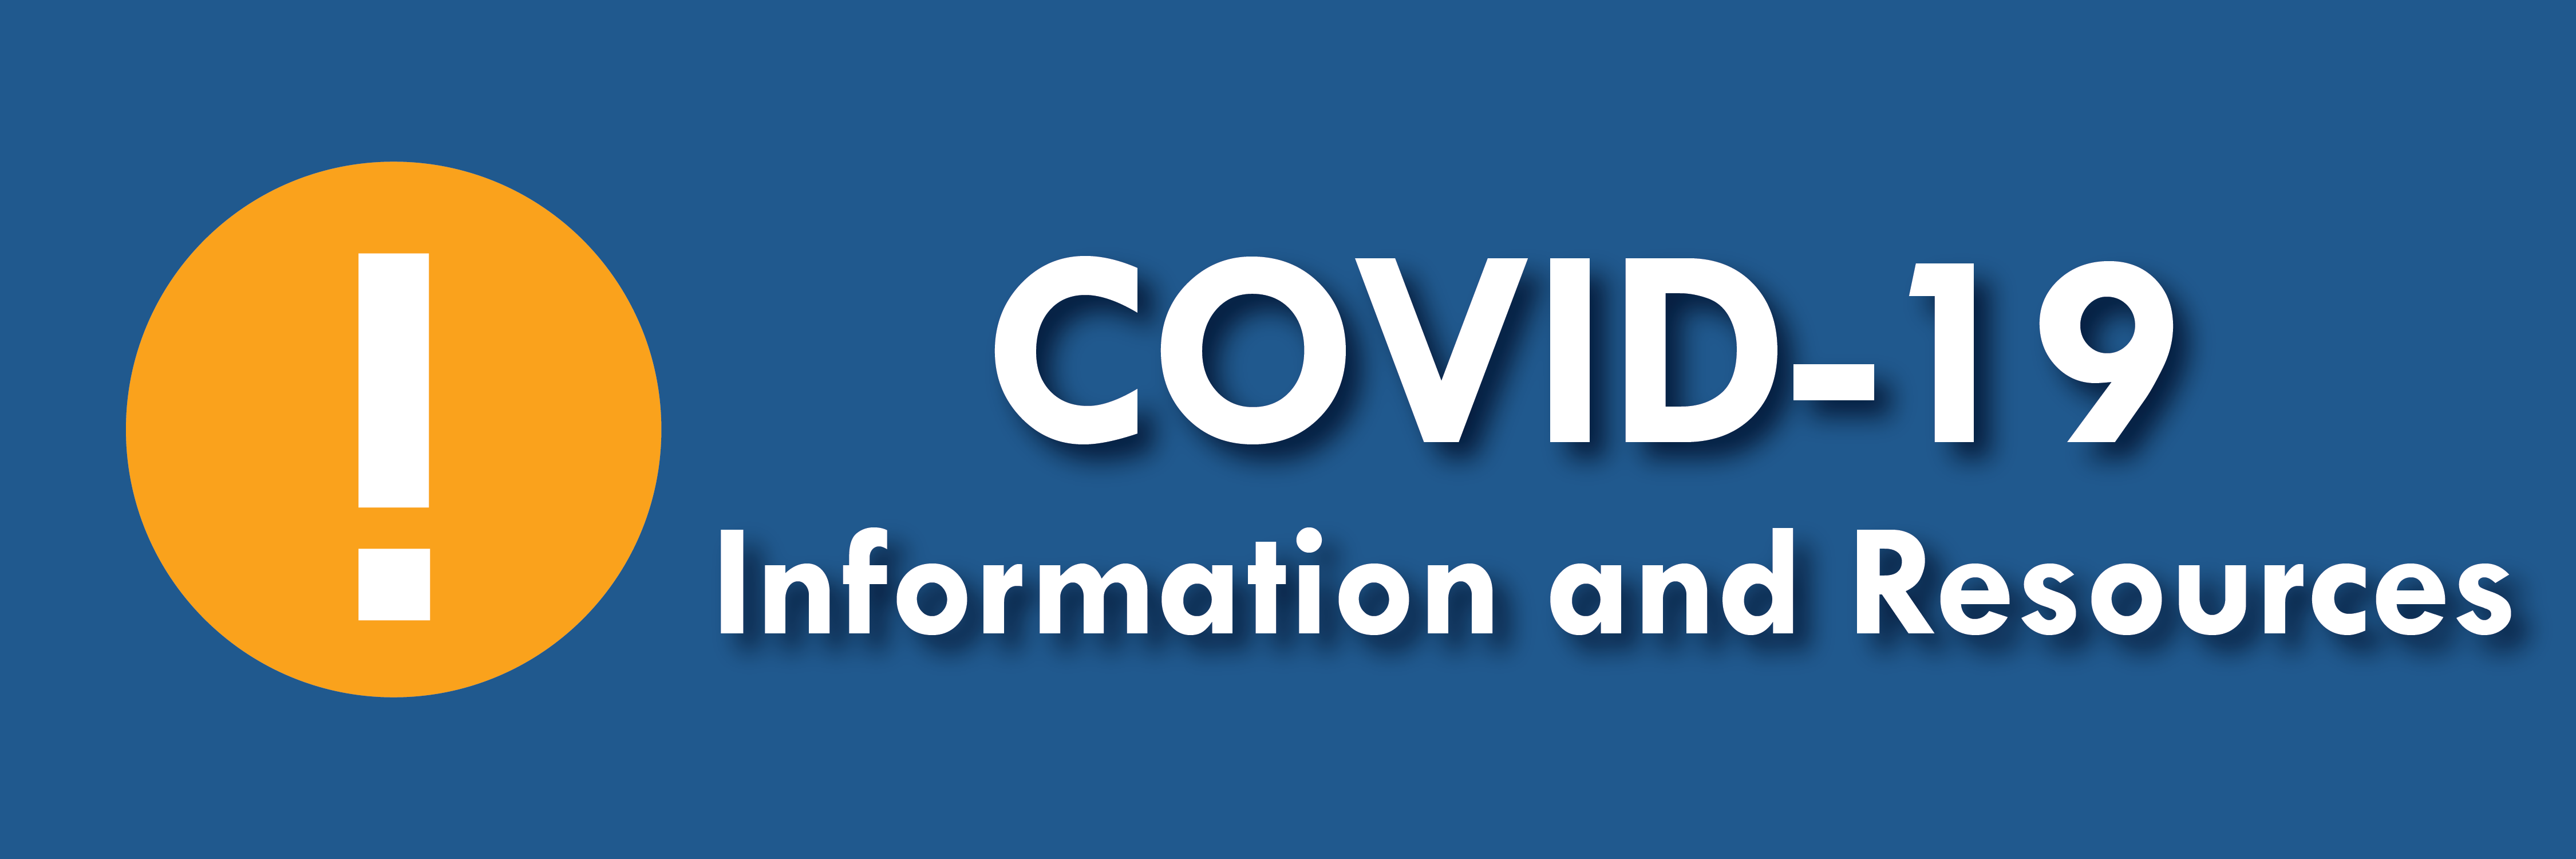 COVID-19 information. 